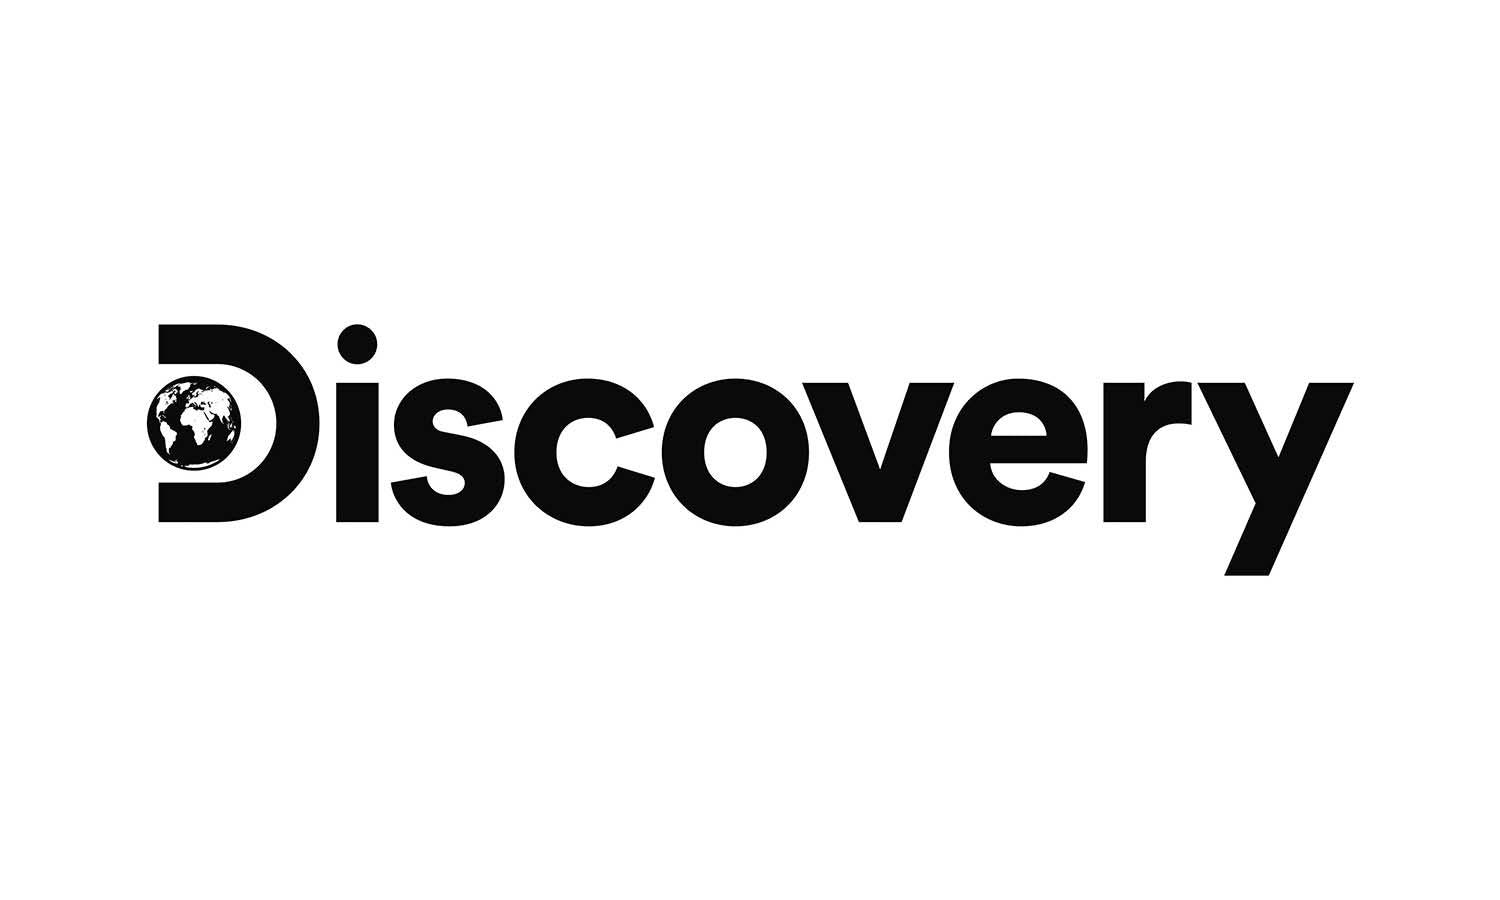 Discovery Channel Logo Design: History & Evolution - Kreafolk